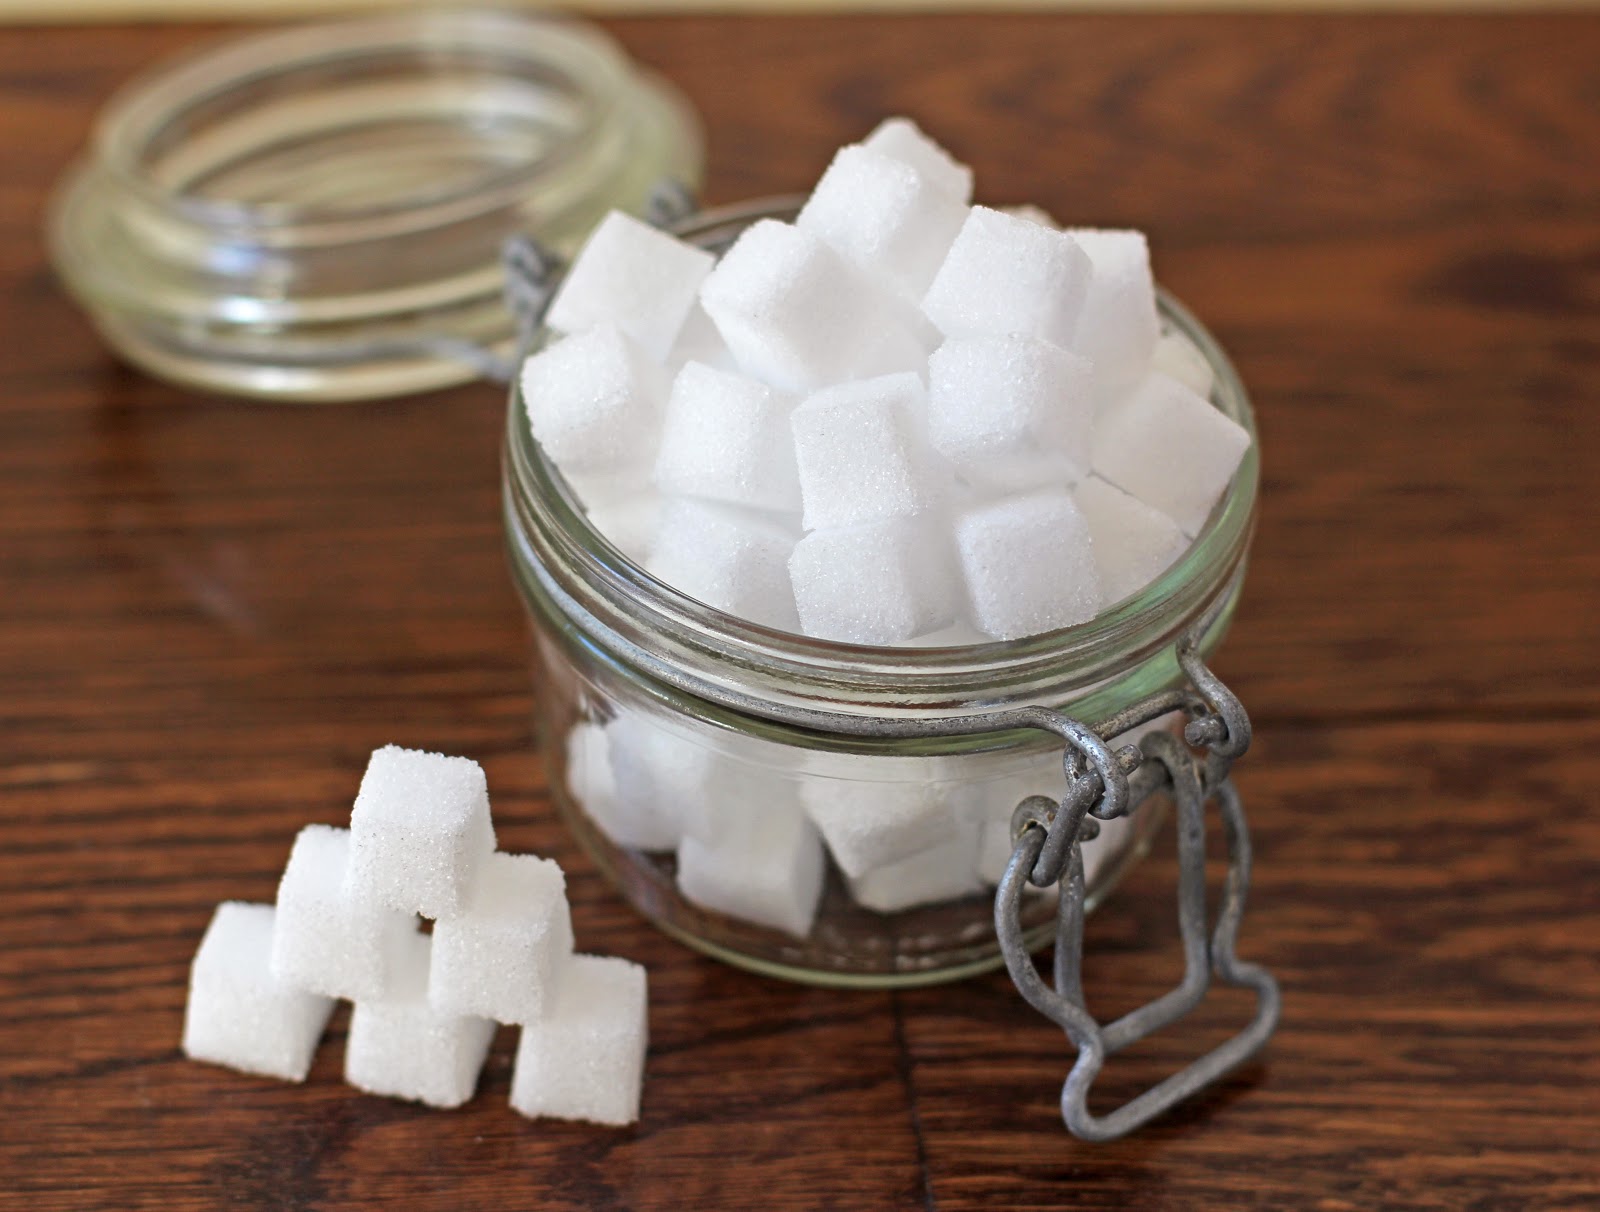 Image result for sugar cubes